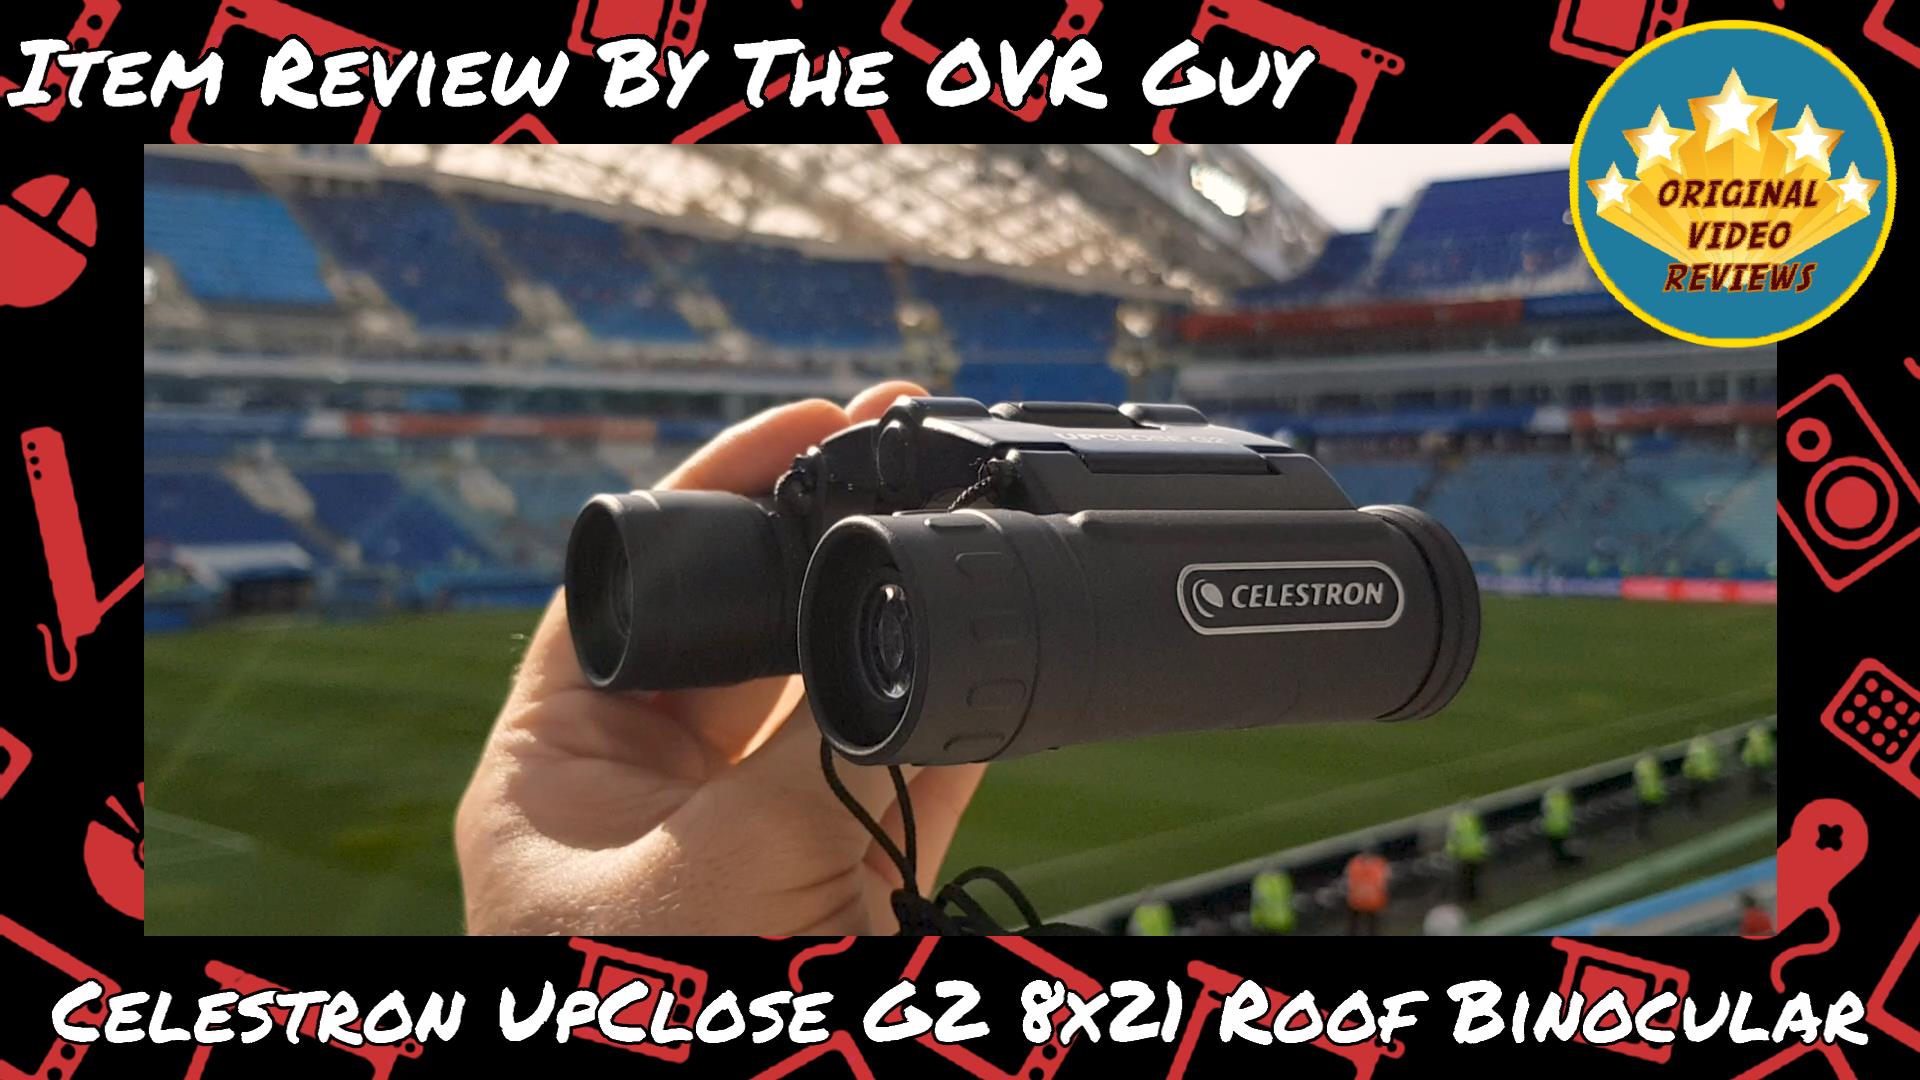 Celestron UpClose G2 8x21 Roof Binocular Review (Thumbnail)